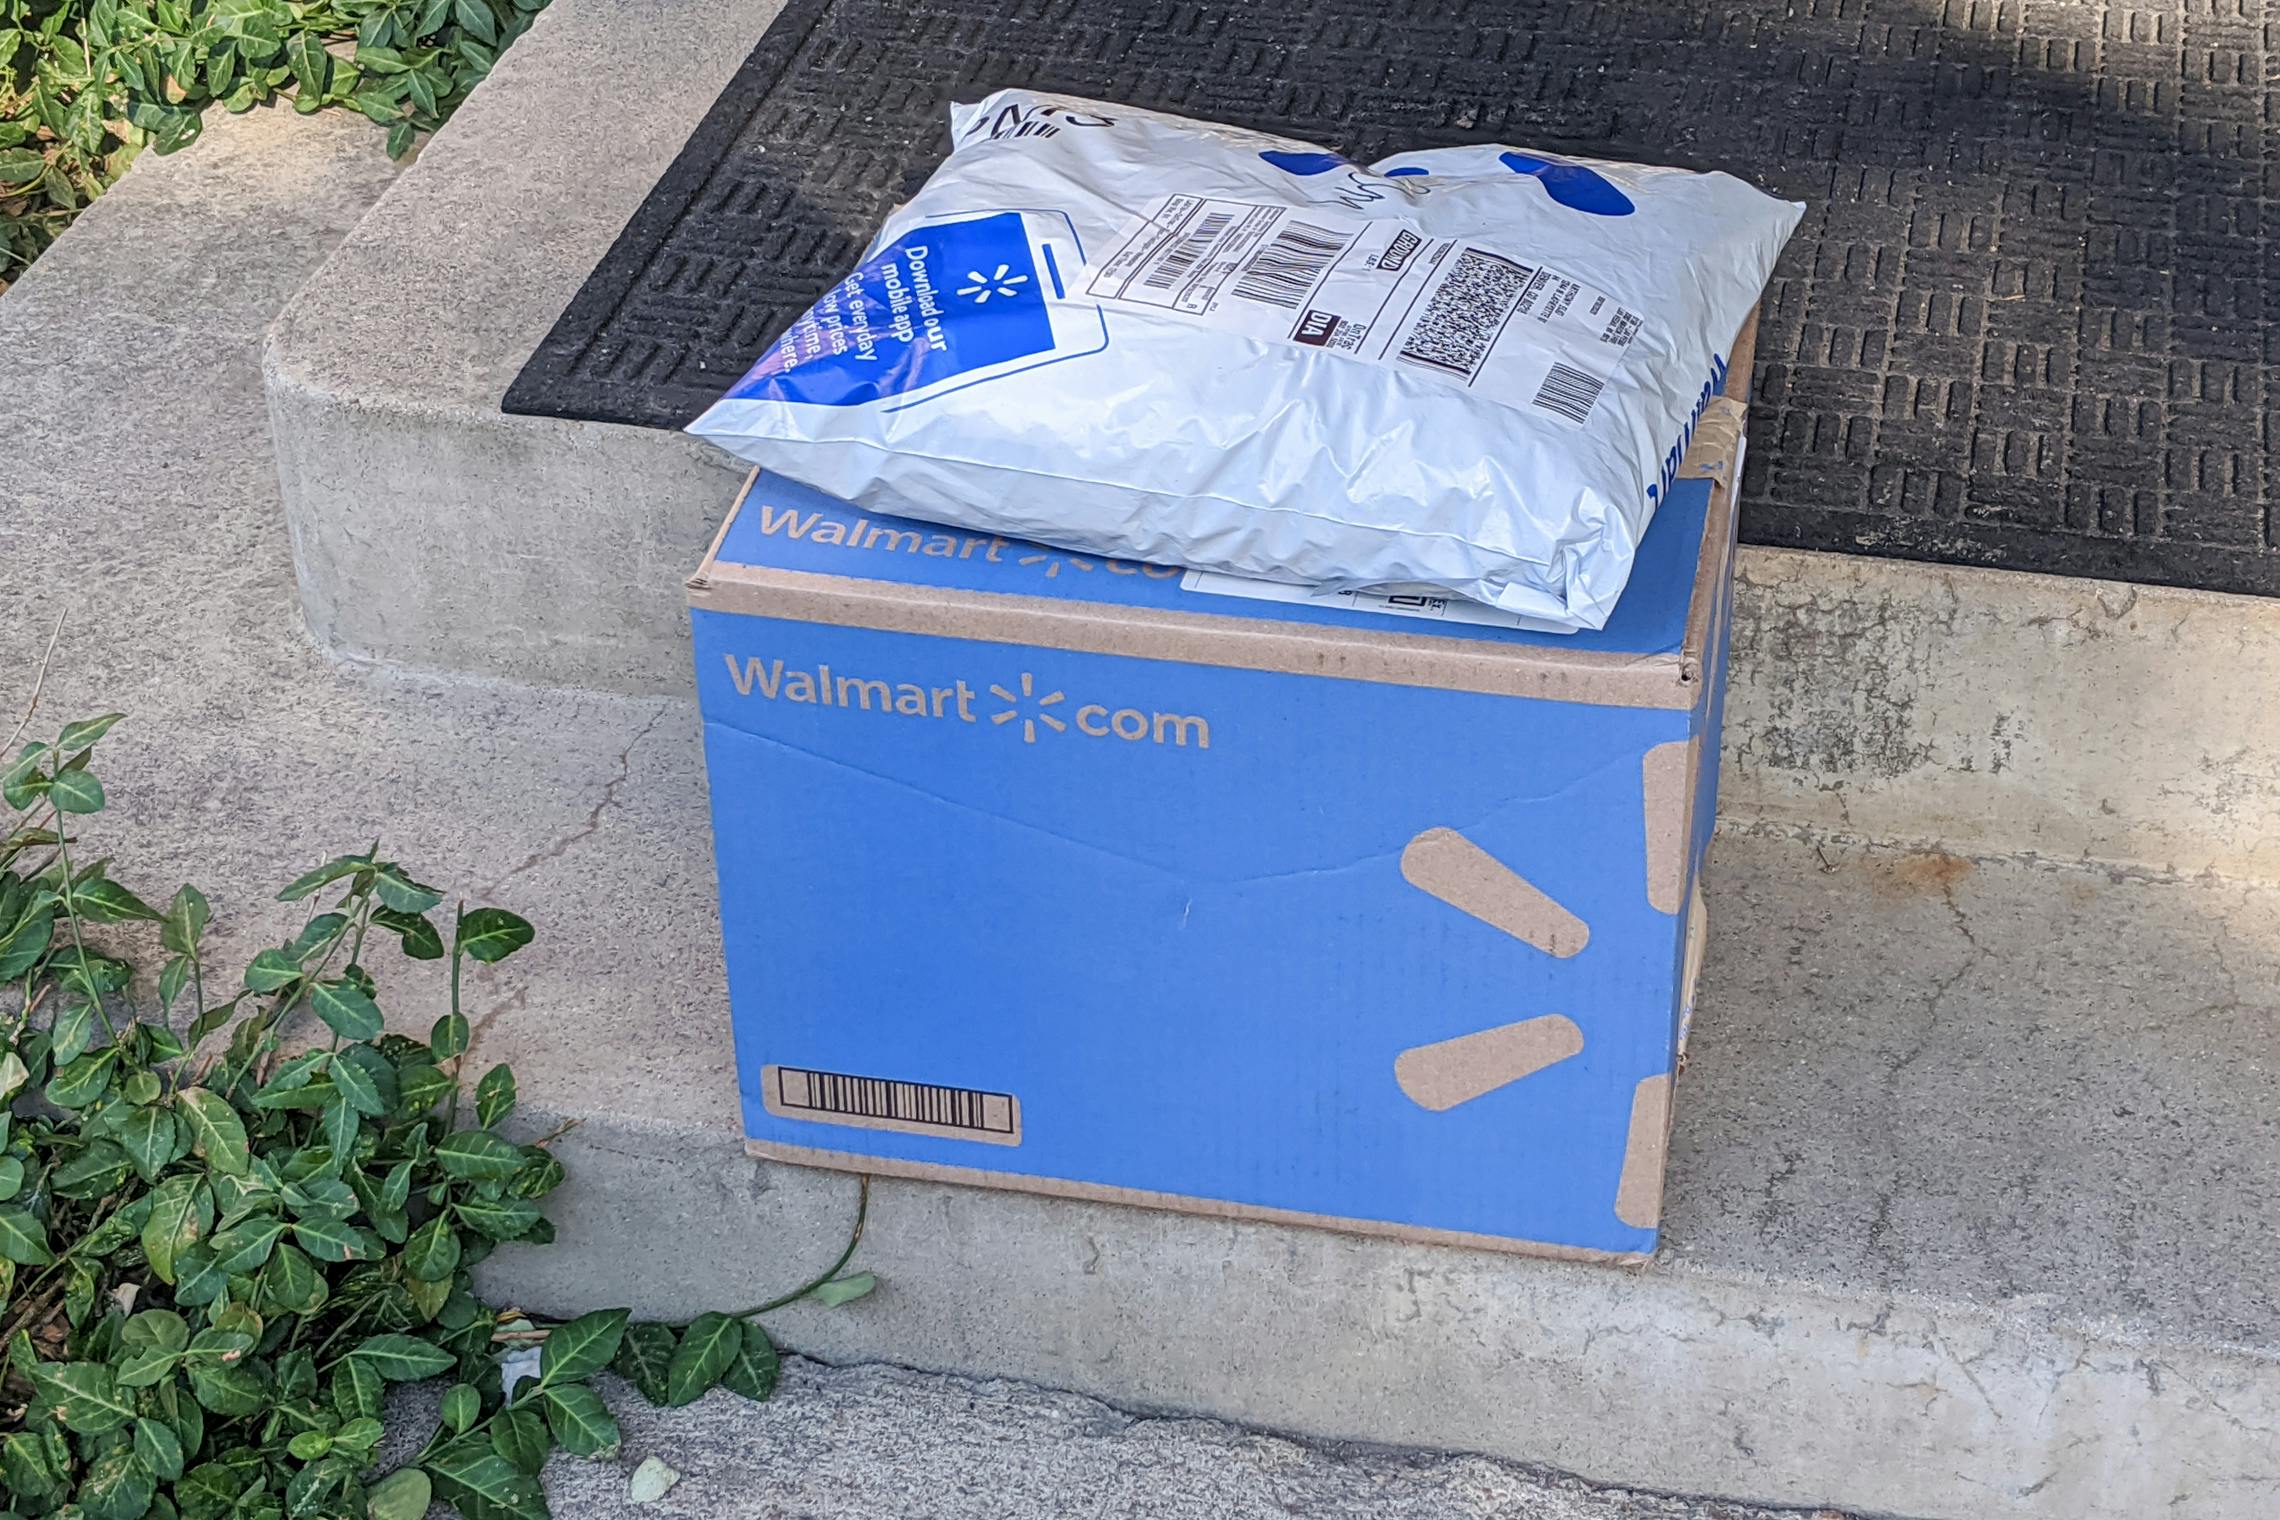 Walmart online order packages on a doorstep.